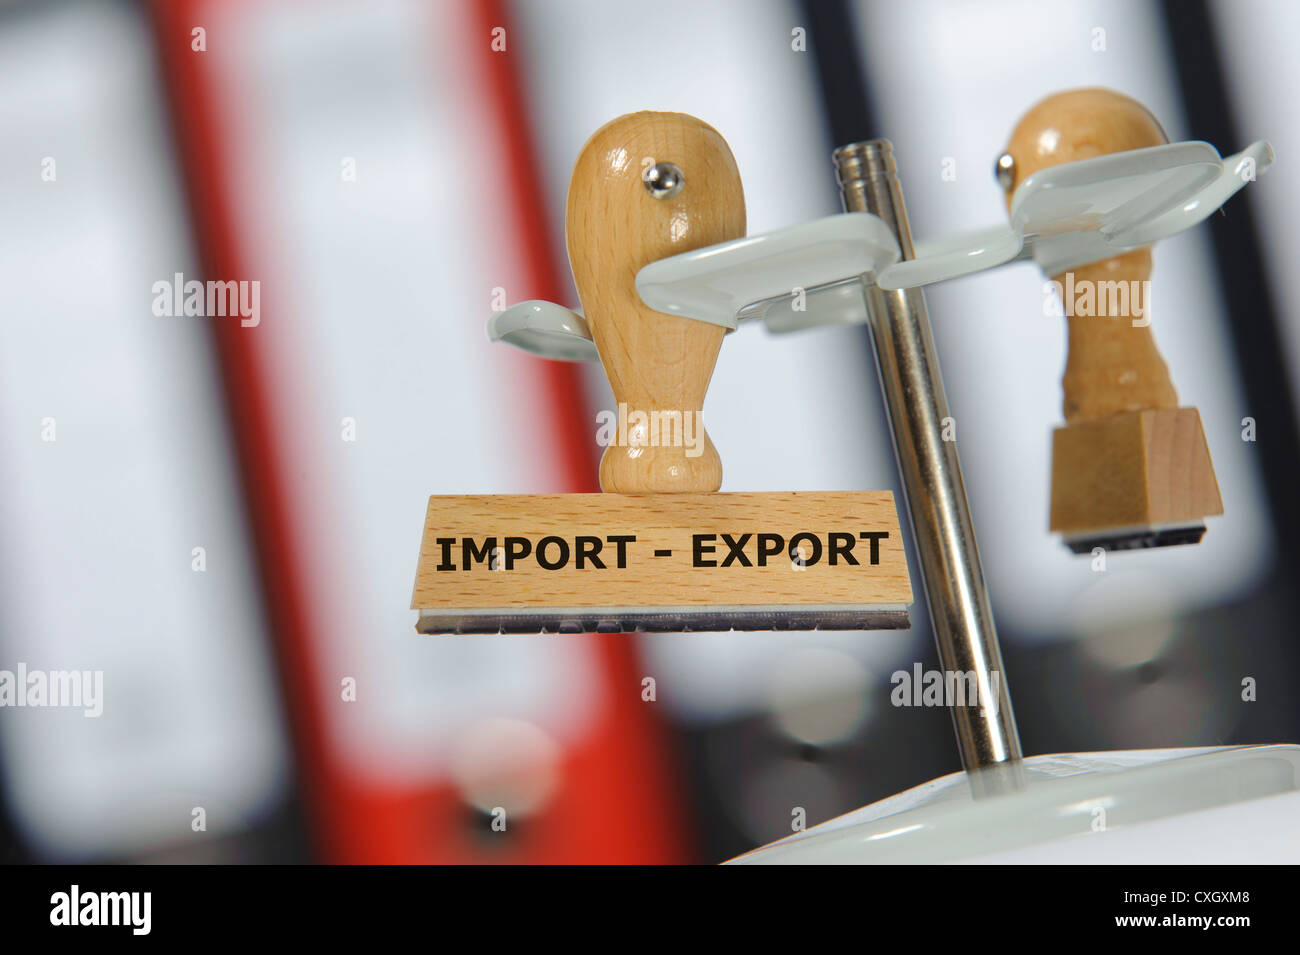 Stempel markiert mit Import - export Stockfoto